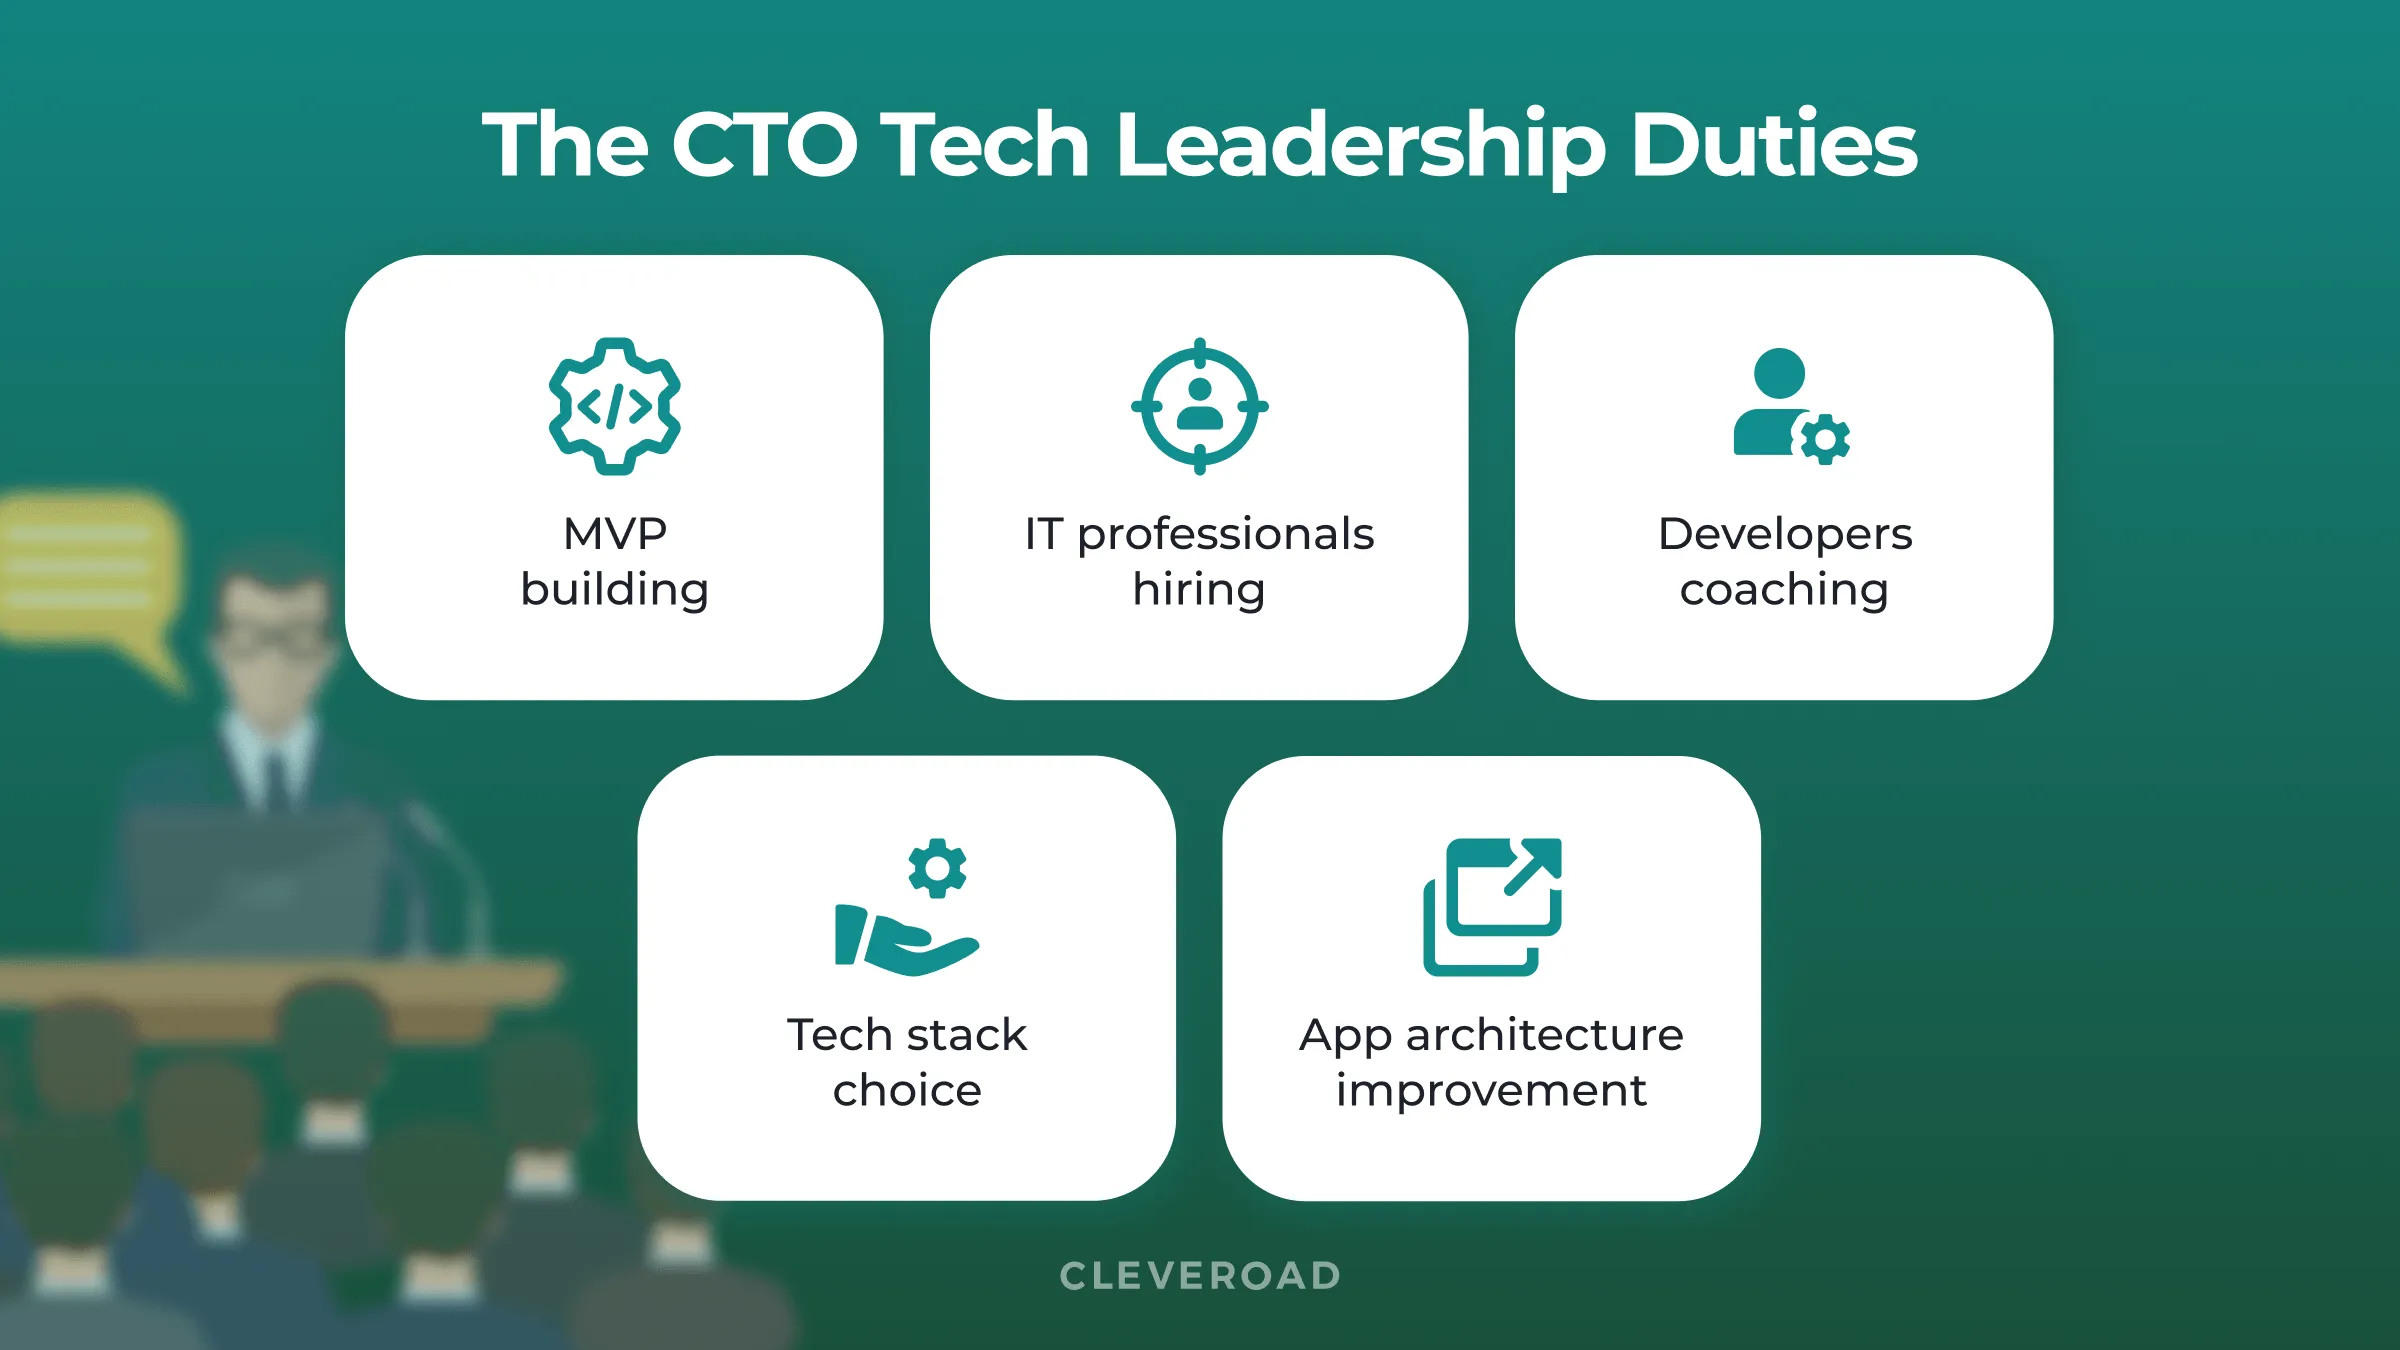 CTO tech leadership duties